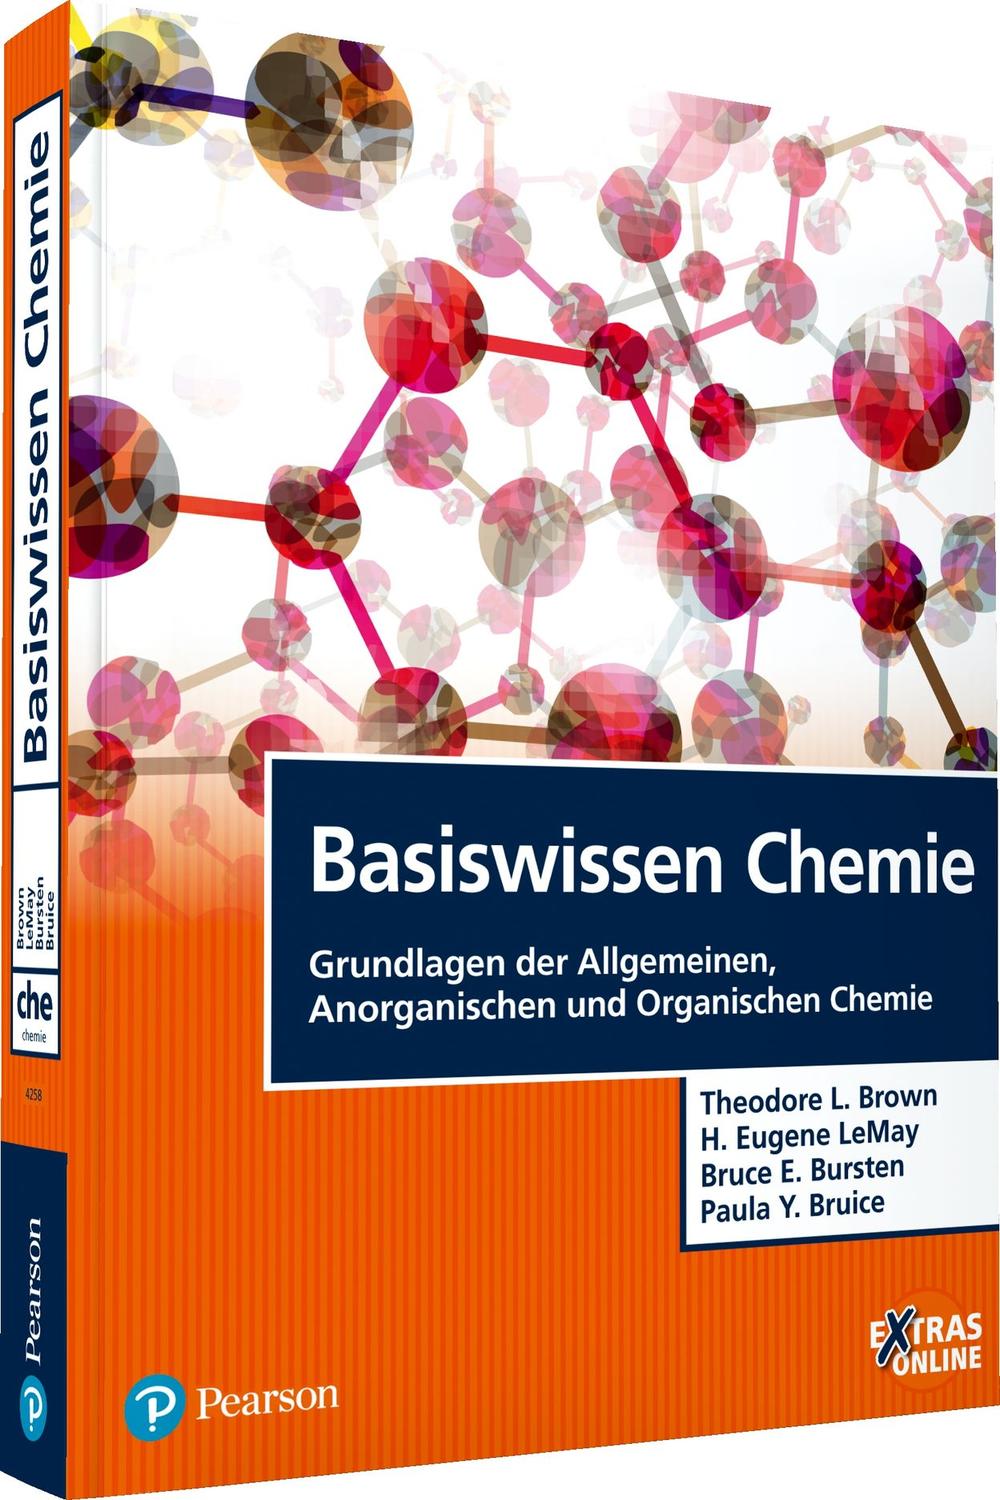 Basiswissen Chemie - Theodore L. Brown, H. Eugene LeMay, Bruce E. Bursten, Paula Y. Bruice